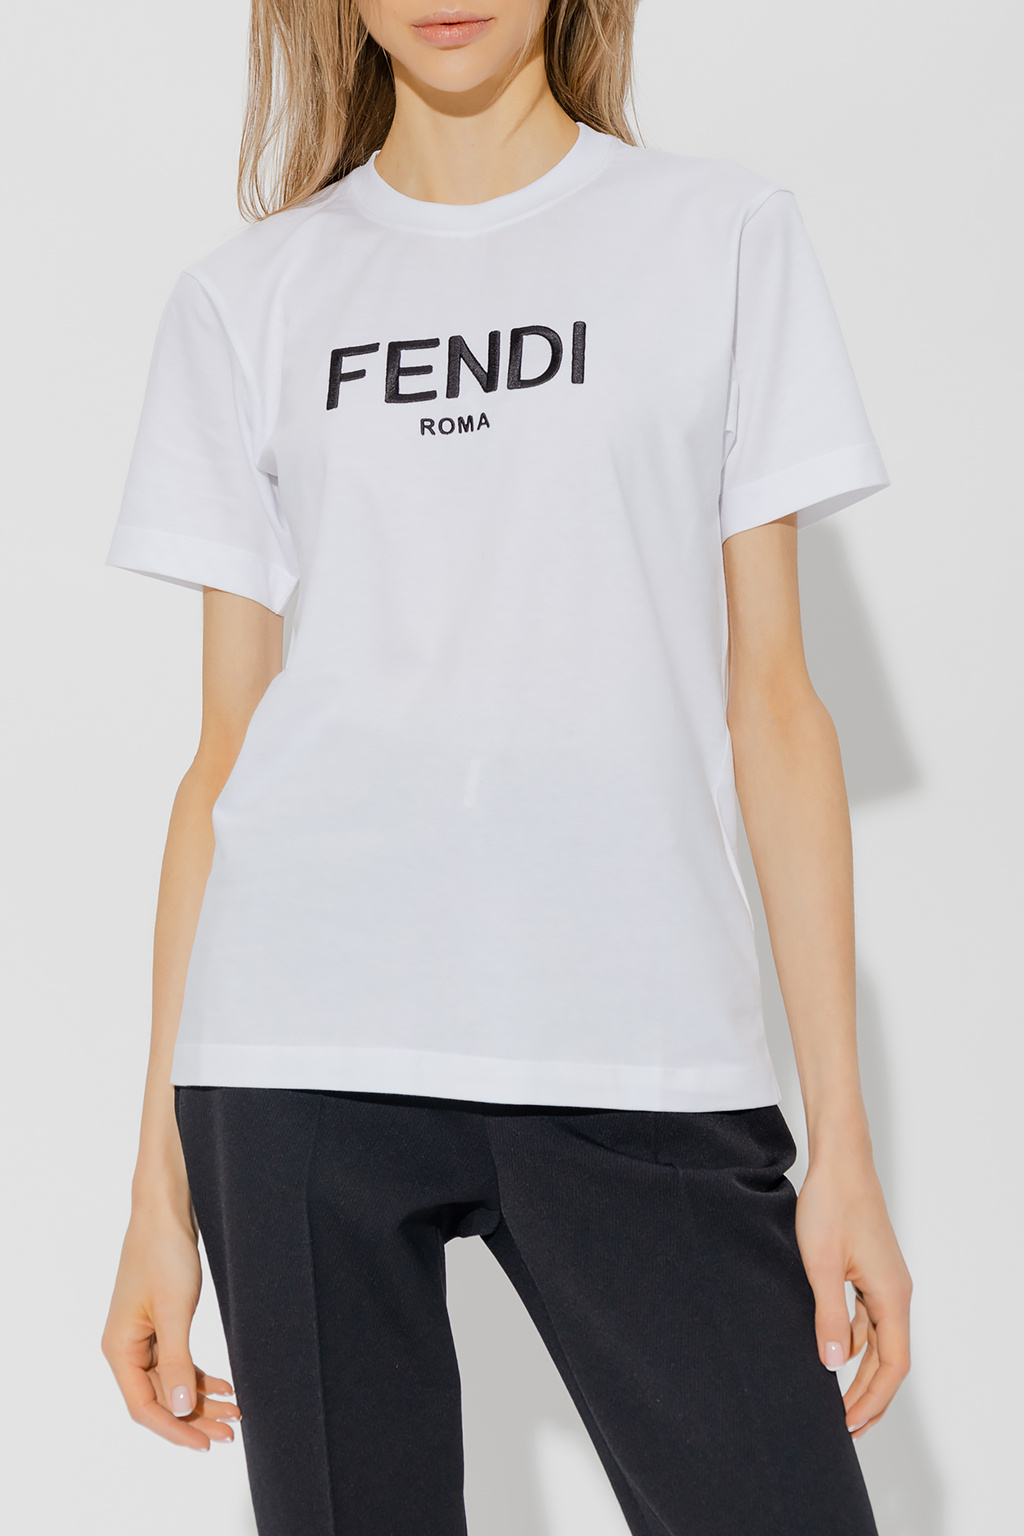 Buy Fendi Fendirama Logo Oversized T-Shirt 'White' - FAF073 A6J6